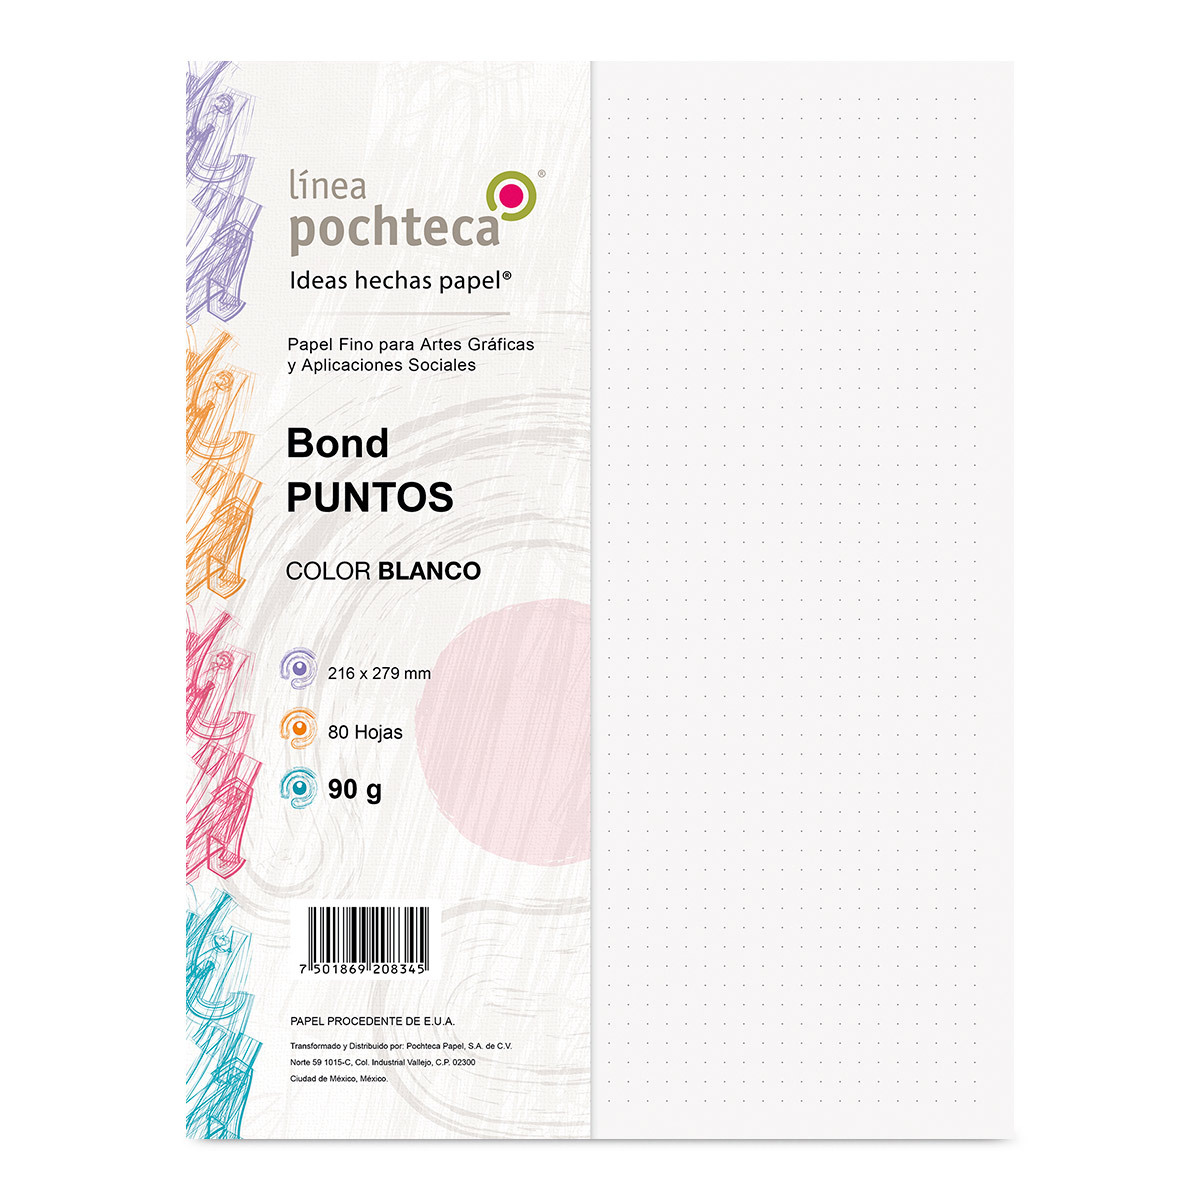 Papel Bond Punteado Pochteca Carta 80 hojas Blanco | Office Depot Mexico